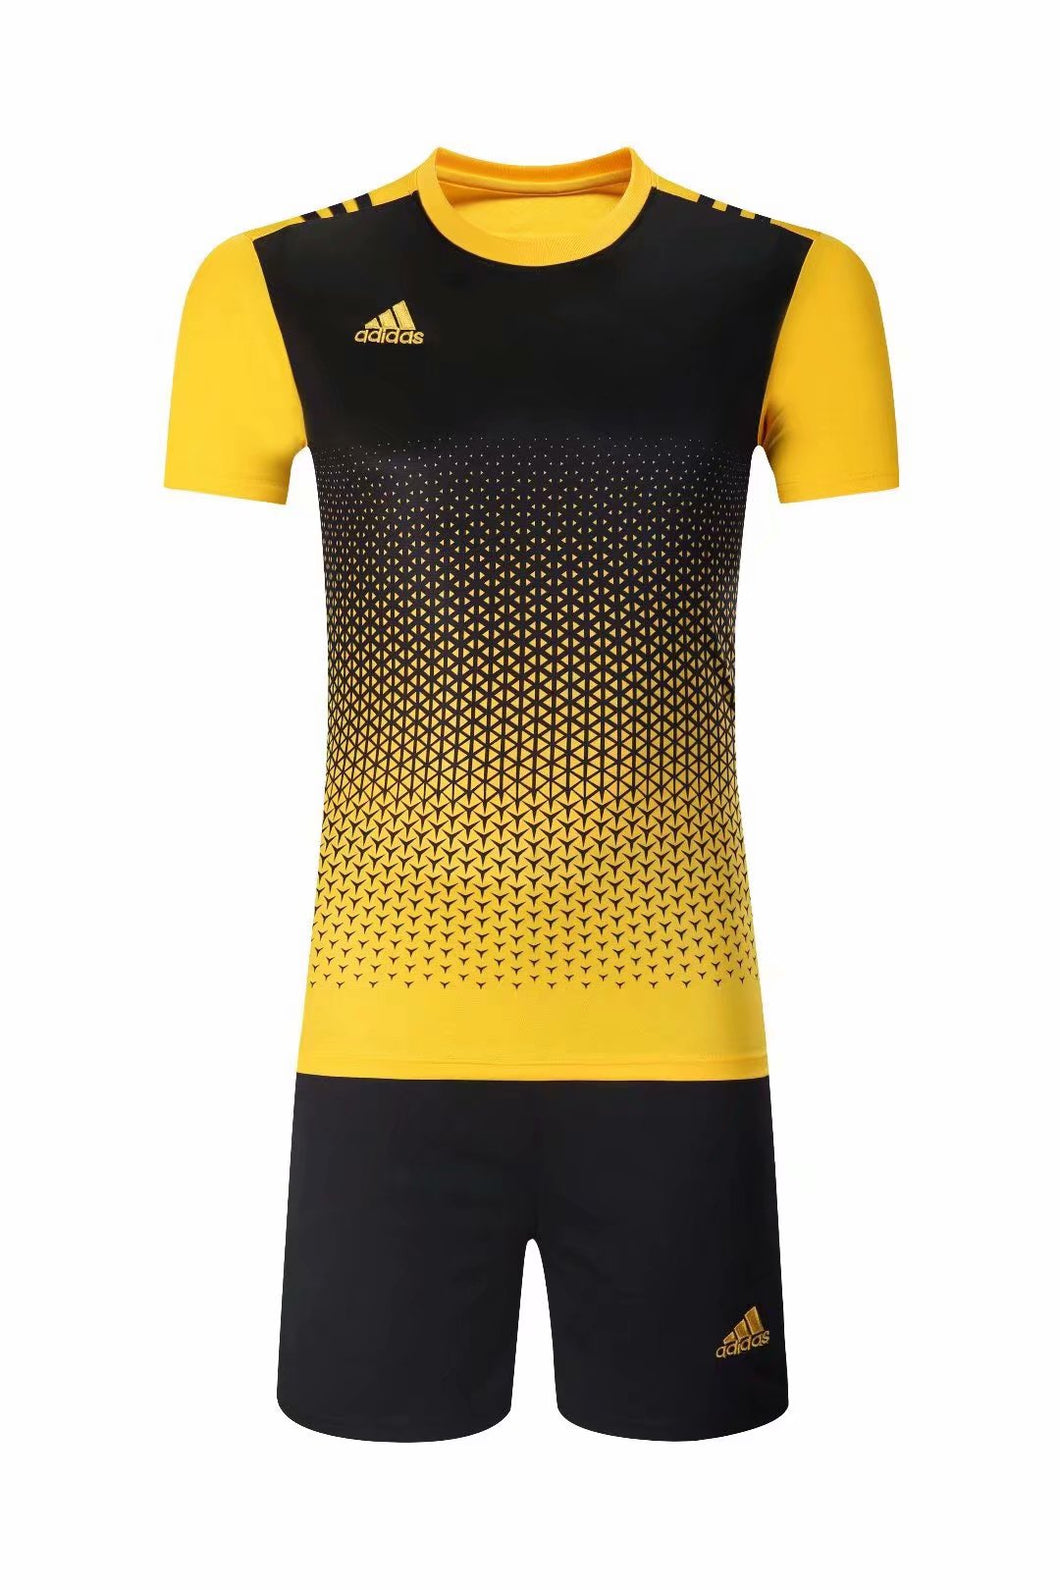 adidas yellow and black football kit